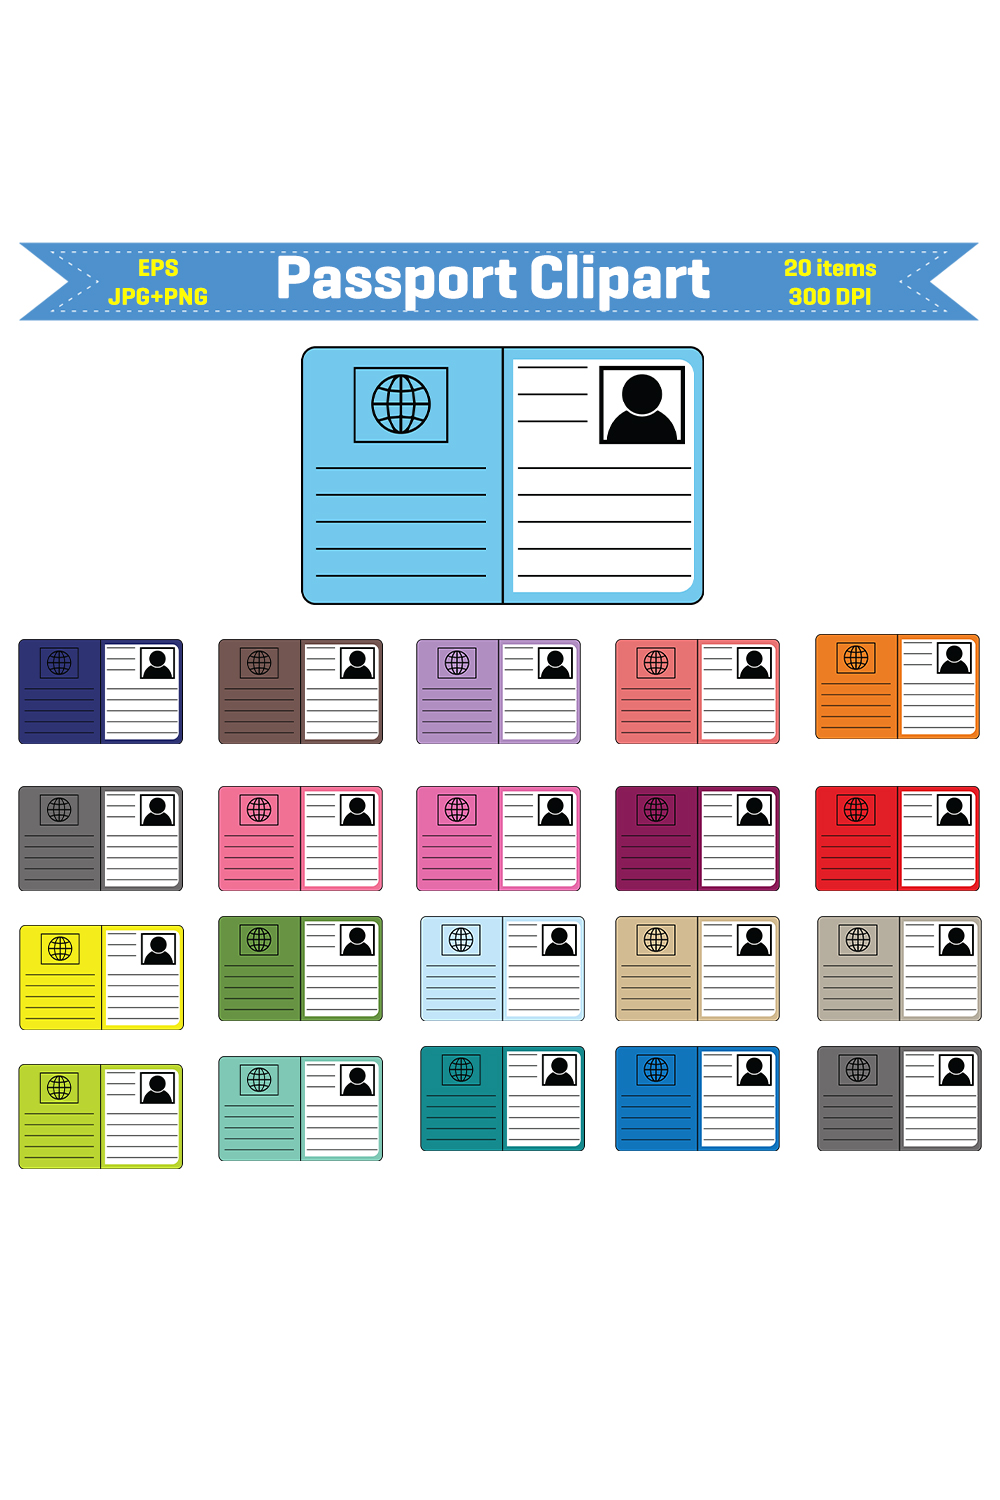 Passport Clipart pinterest preview image.